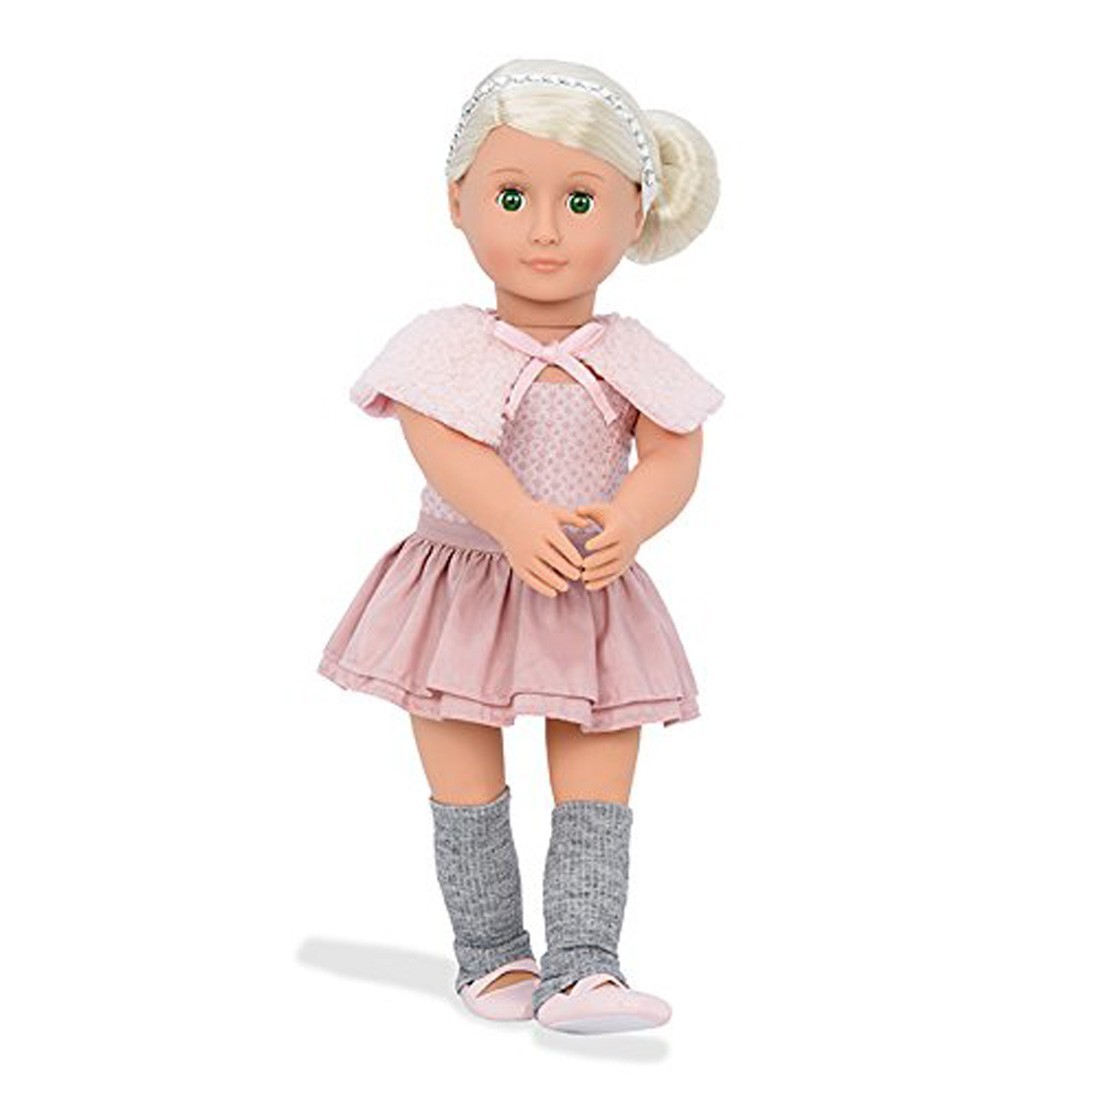 Order Our Generation Regular Doll Alexa Our Generation Delivered